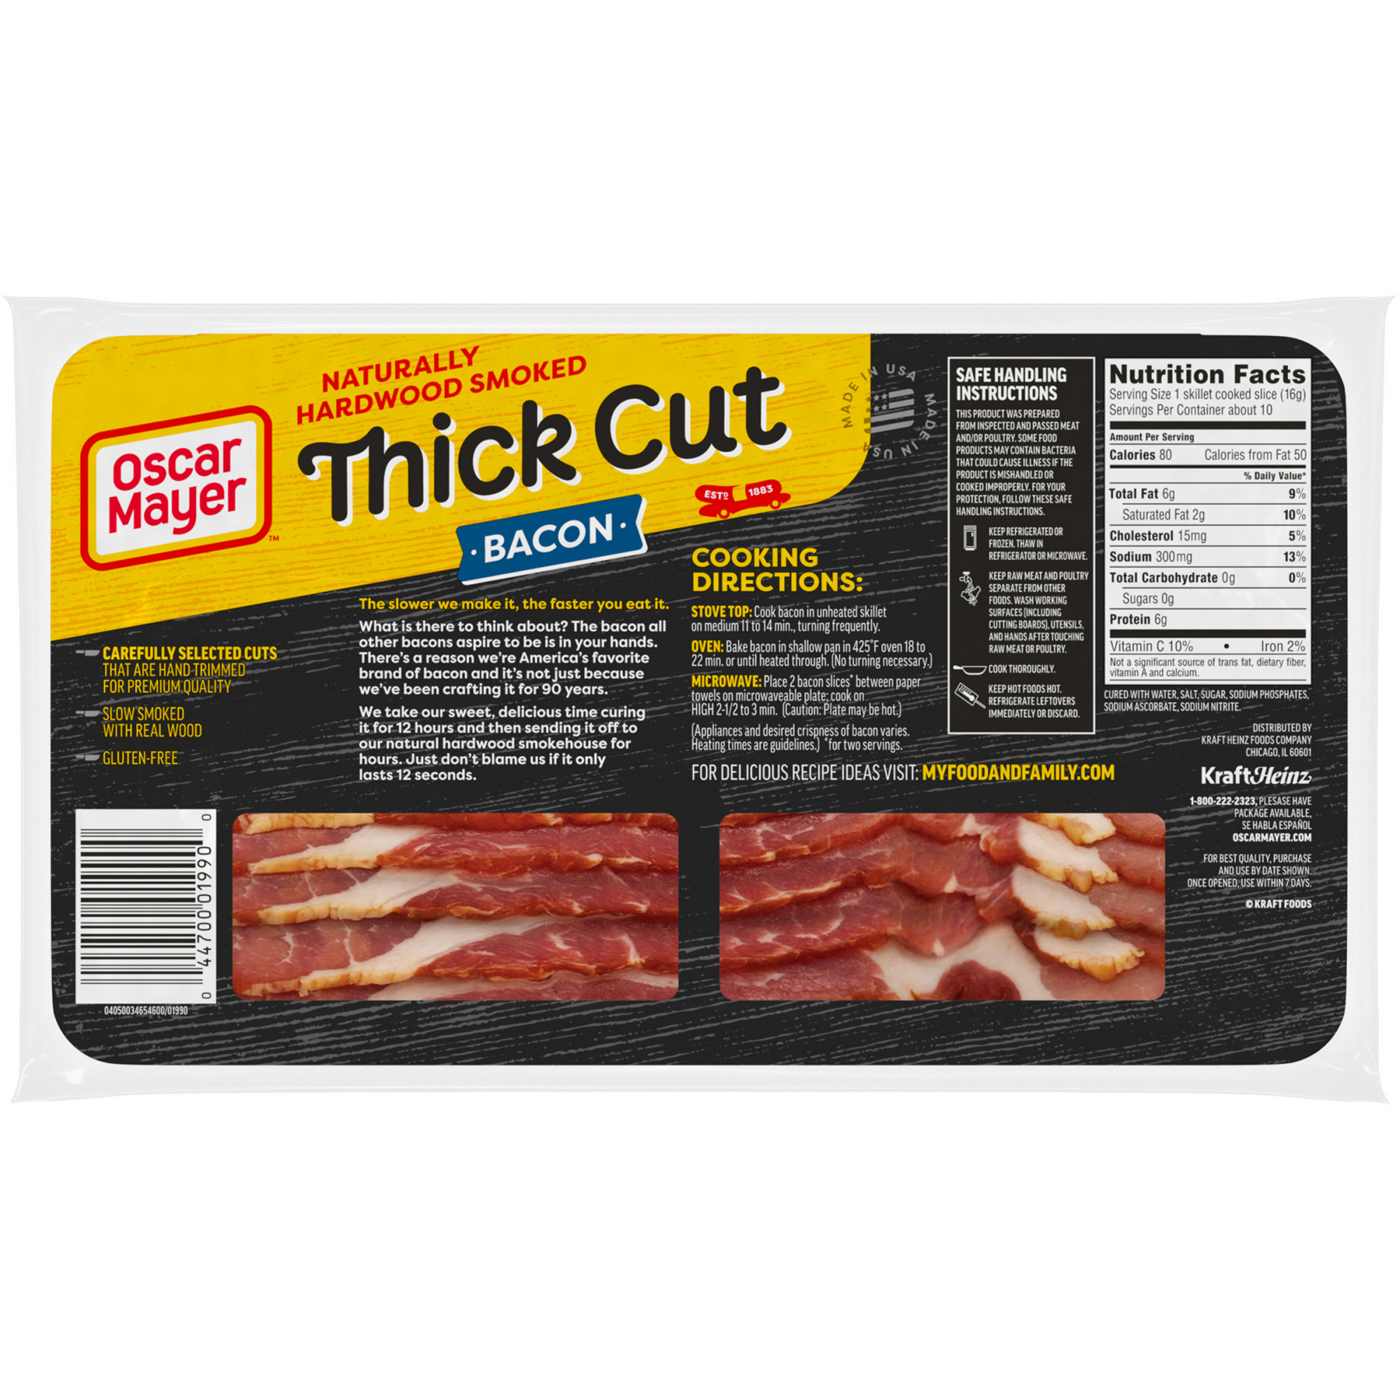 Oscar Mayer Hardwood Smoked Thick Cut Bacon; image 4 of 5